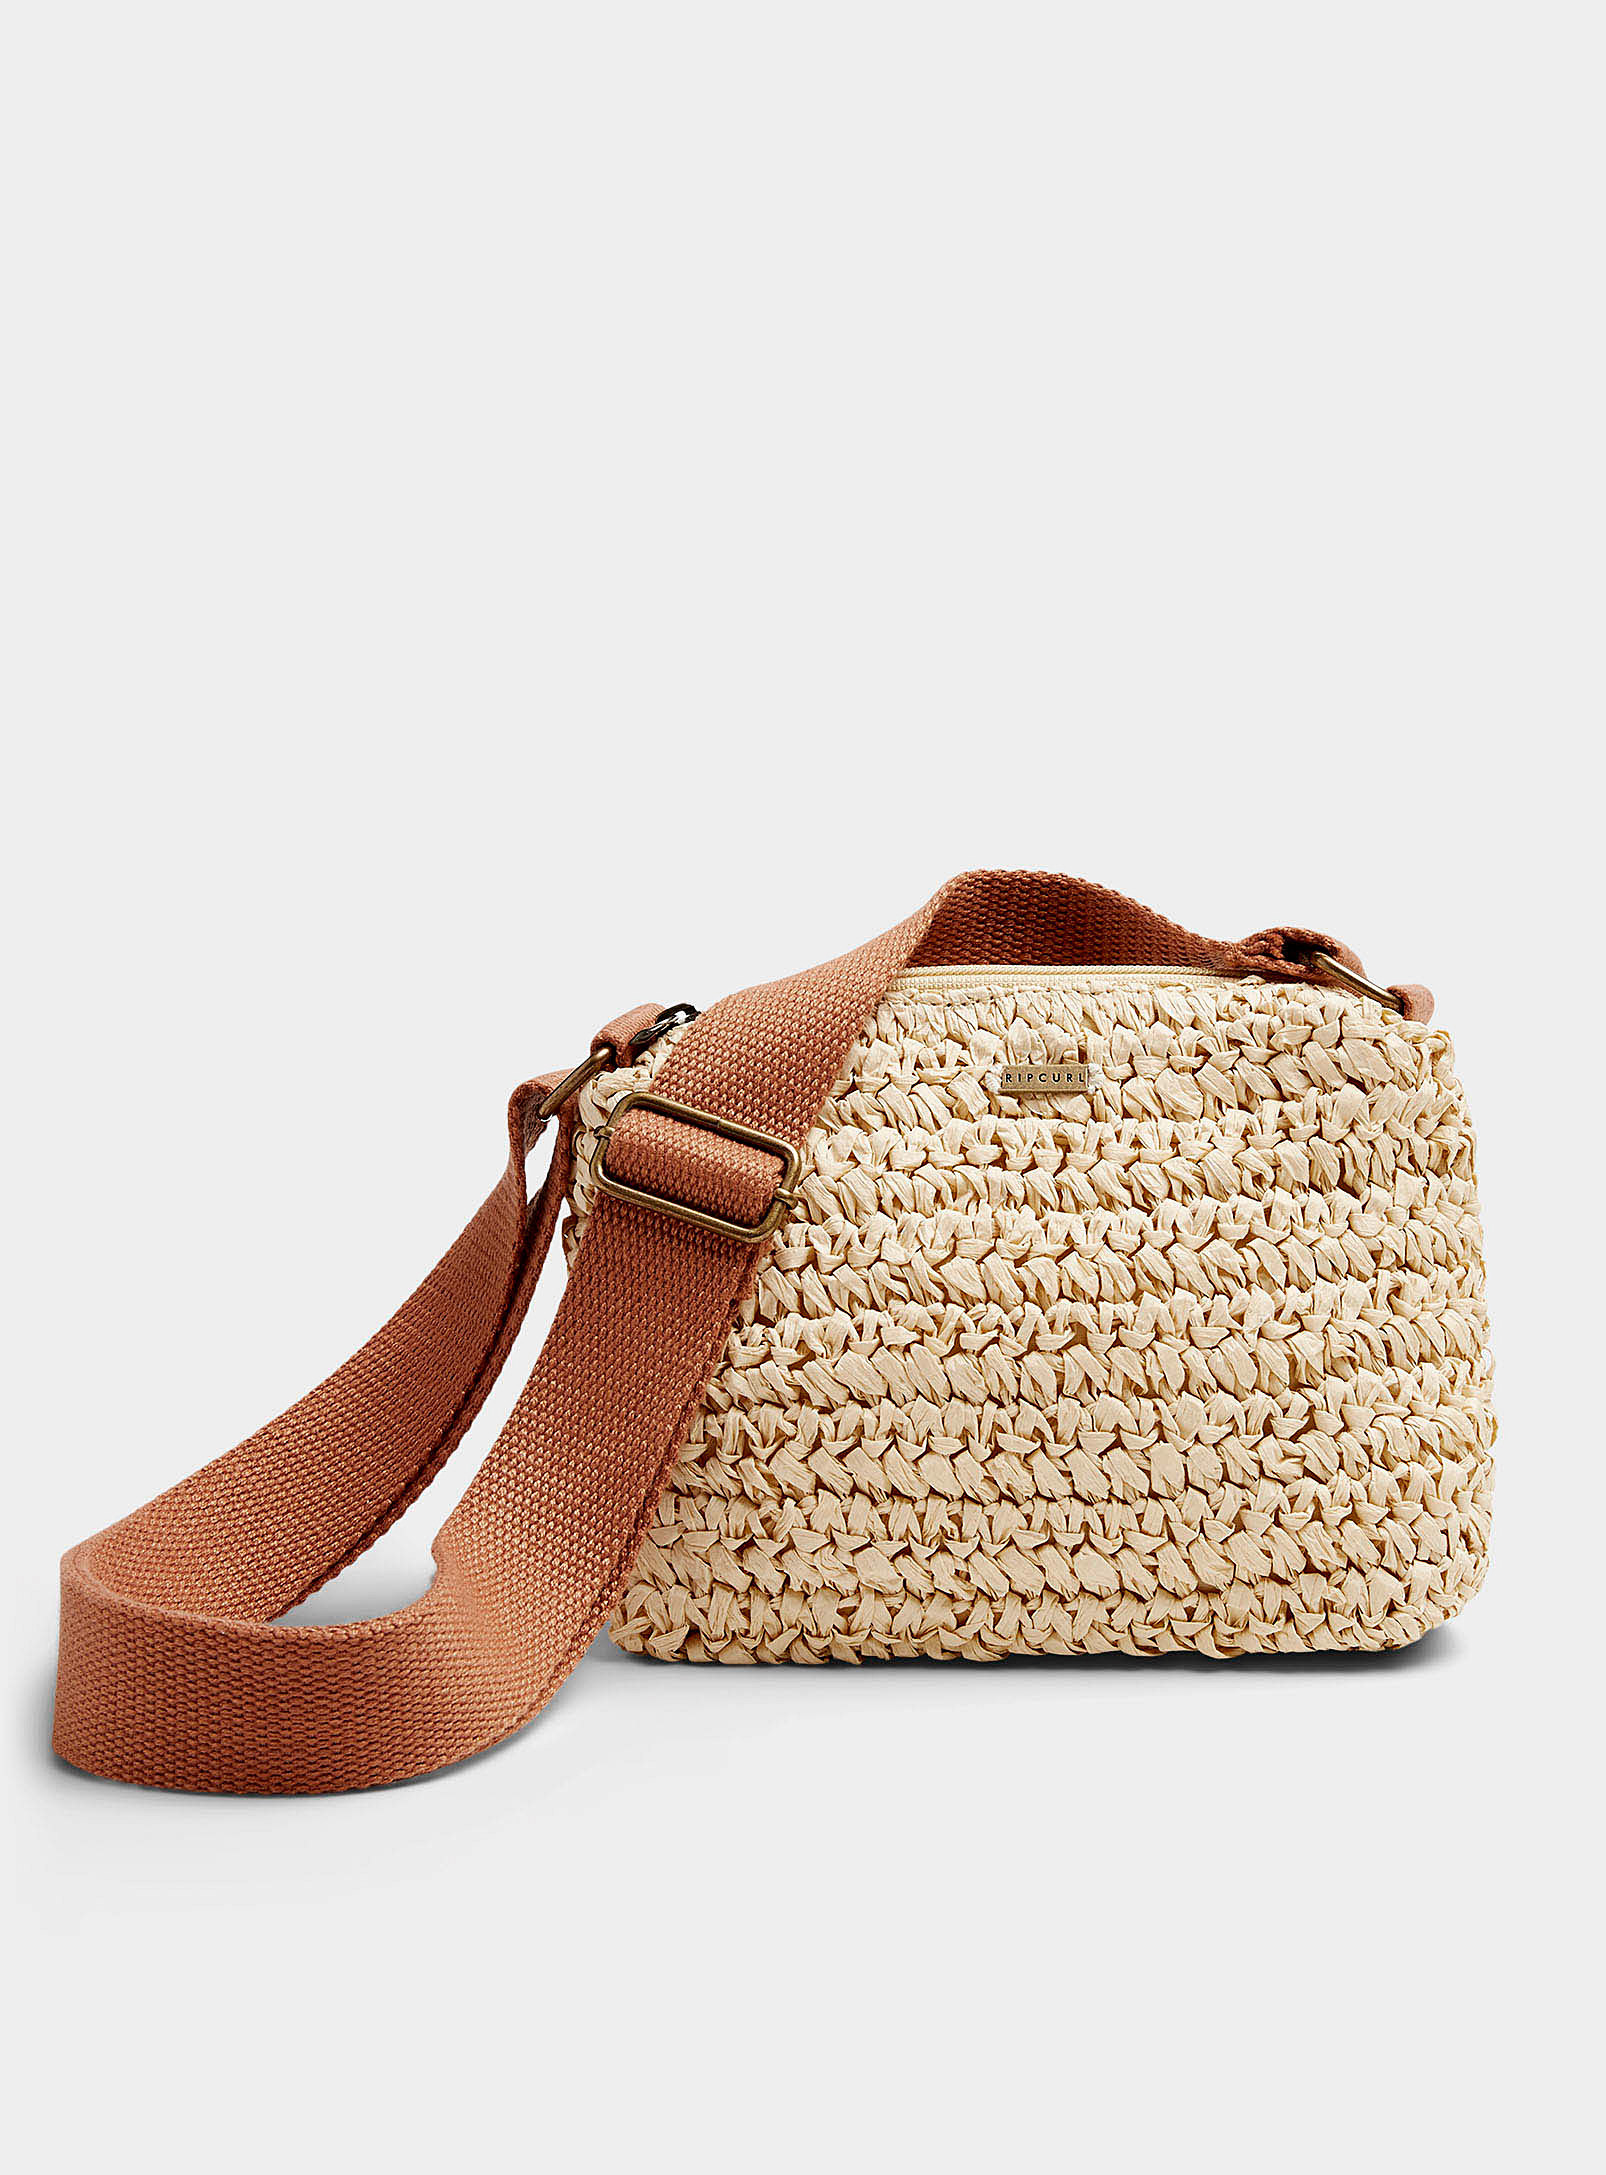 Rip Curl - Women's Small braided straw bag